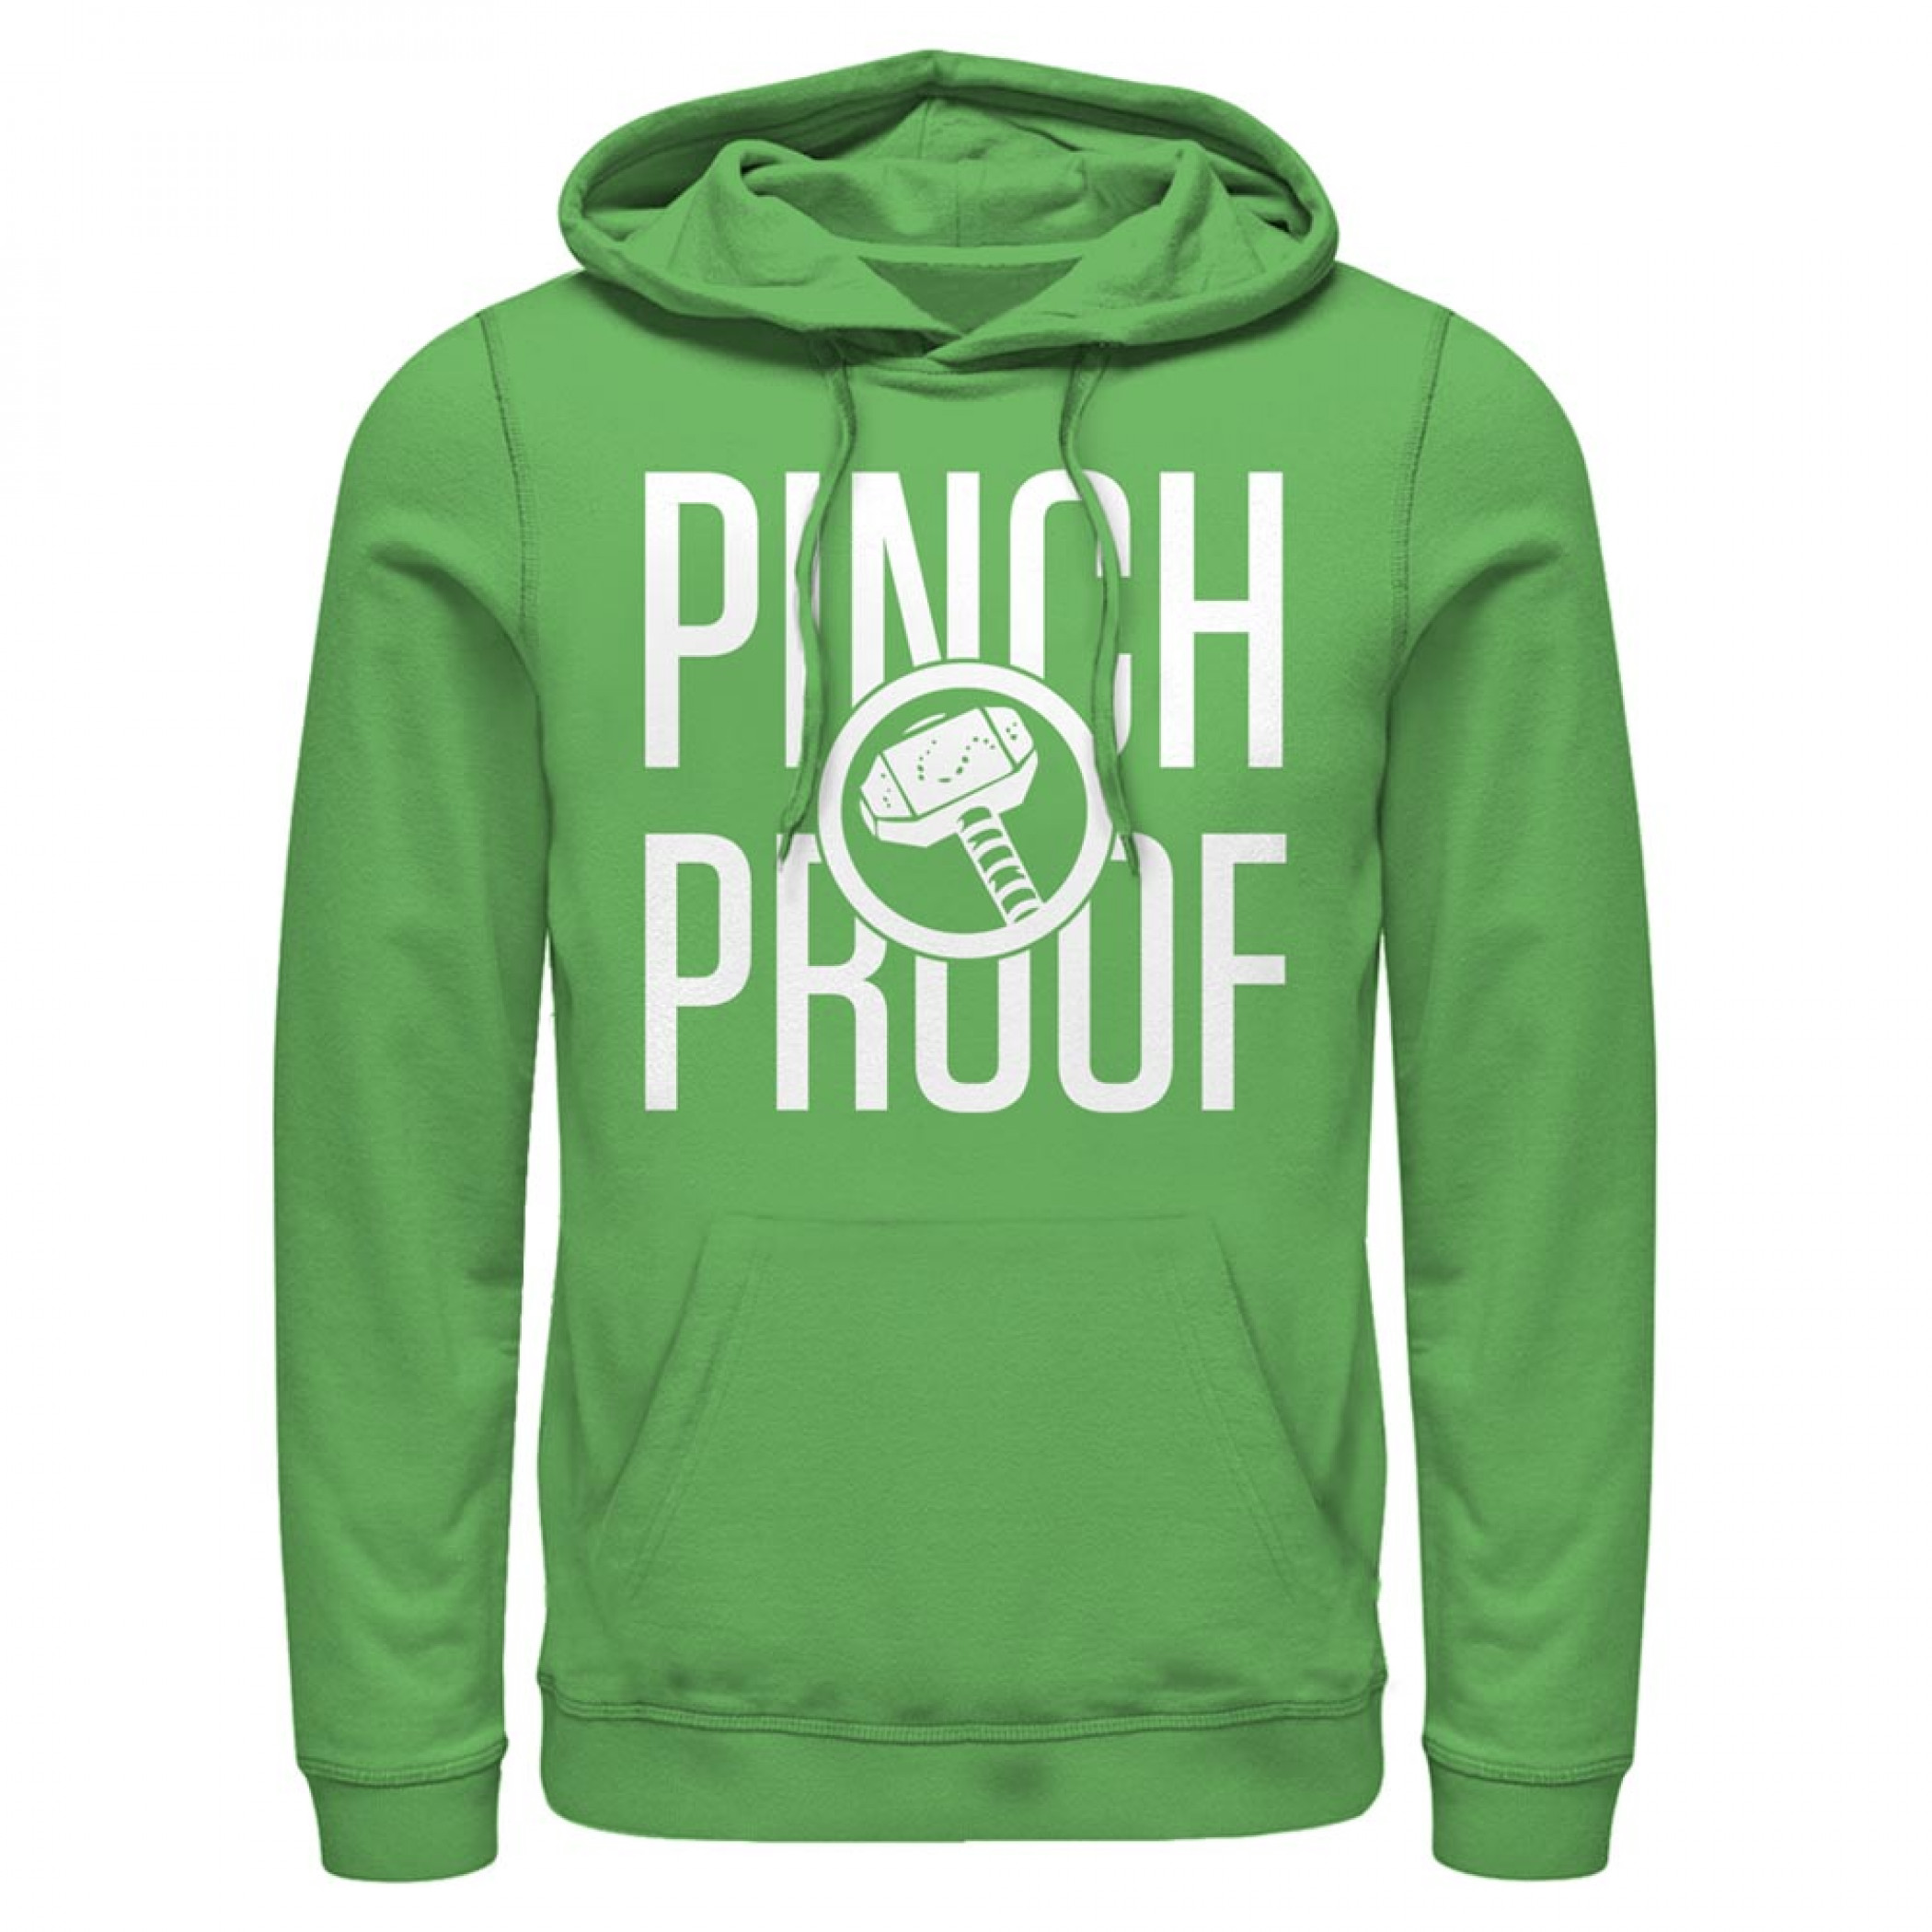 Thor Pinch Proof Green Hoodie